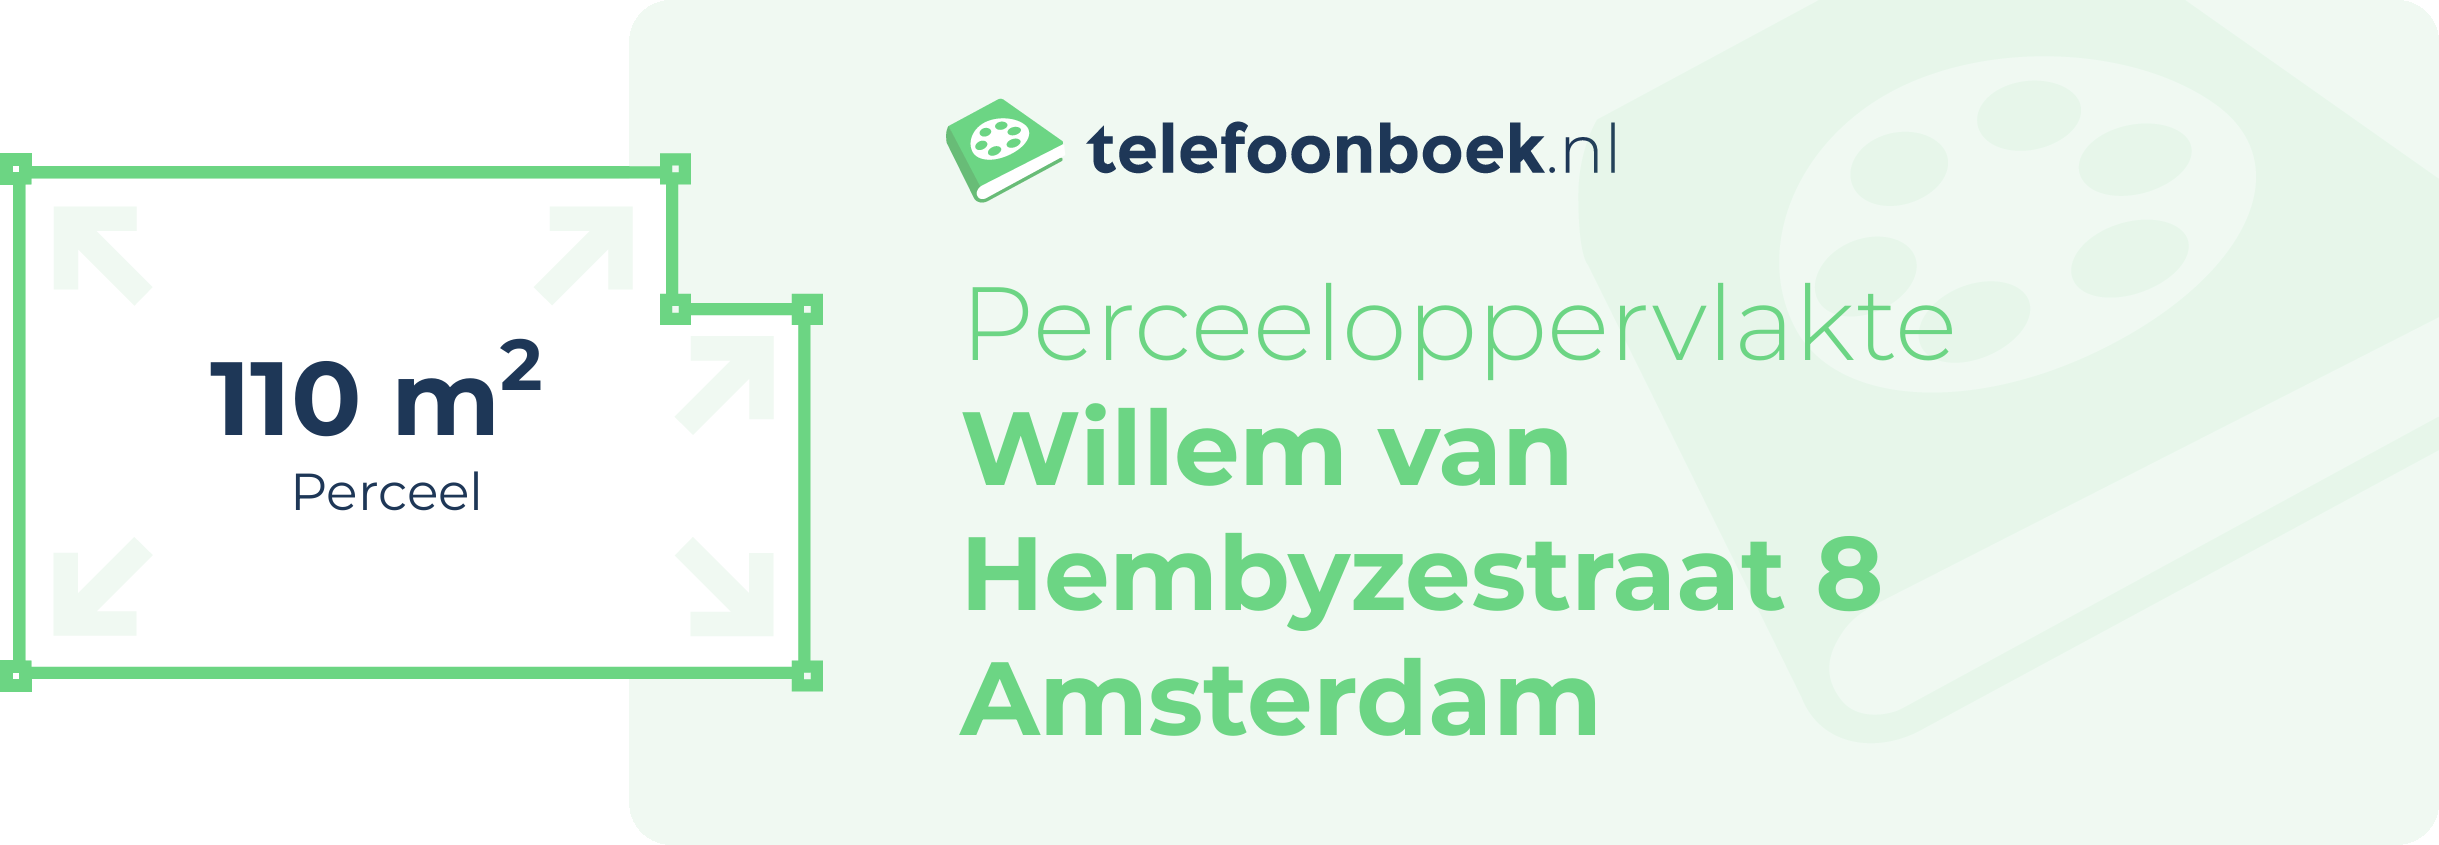 Perceeloppervlakte Willem Van Hembyzestraat 8 Amsterdam